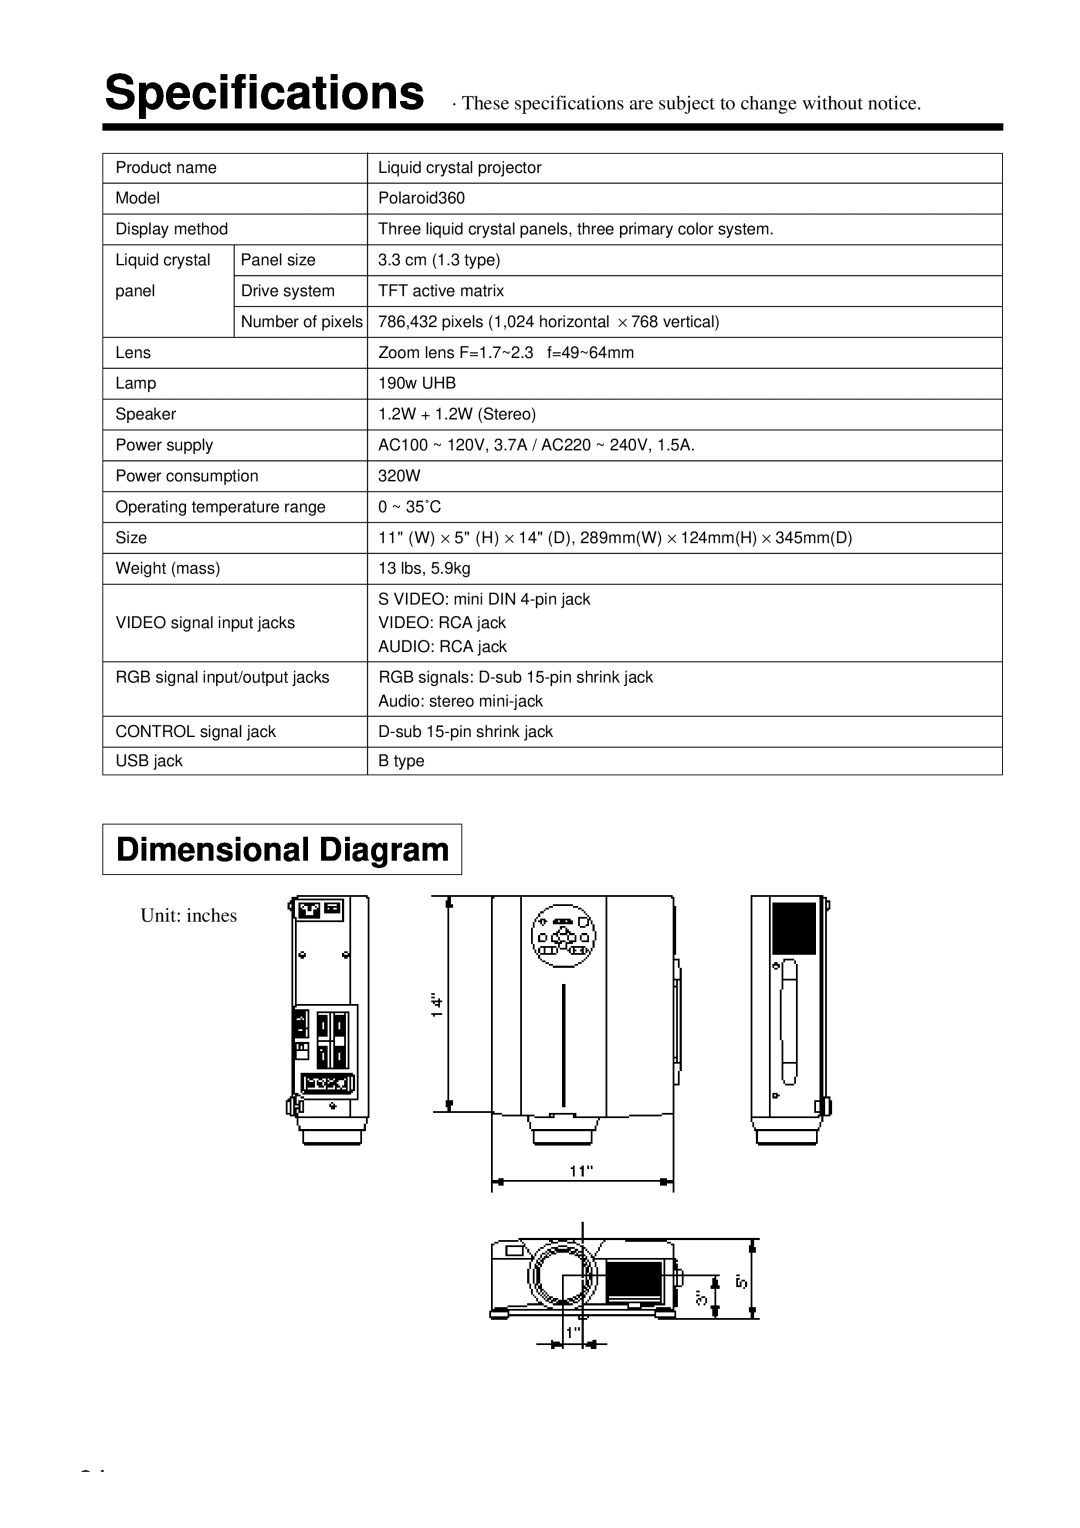 Polaroid PV 360 specifications Dimensional Diagram, Unit inches 